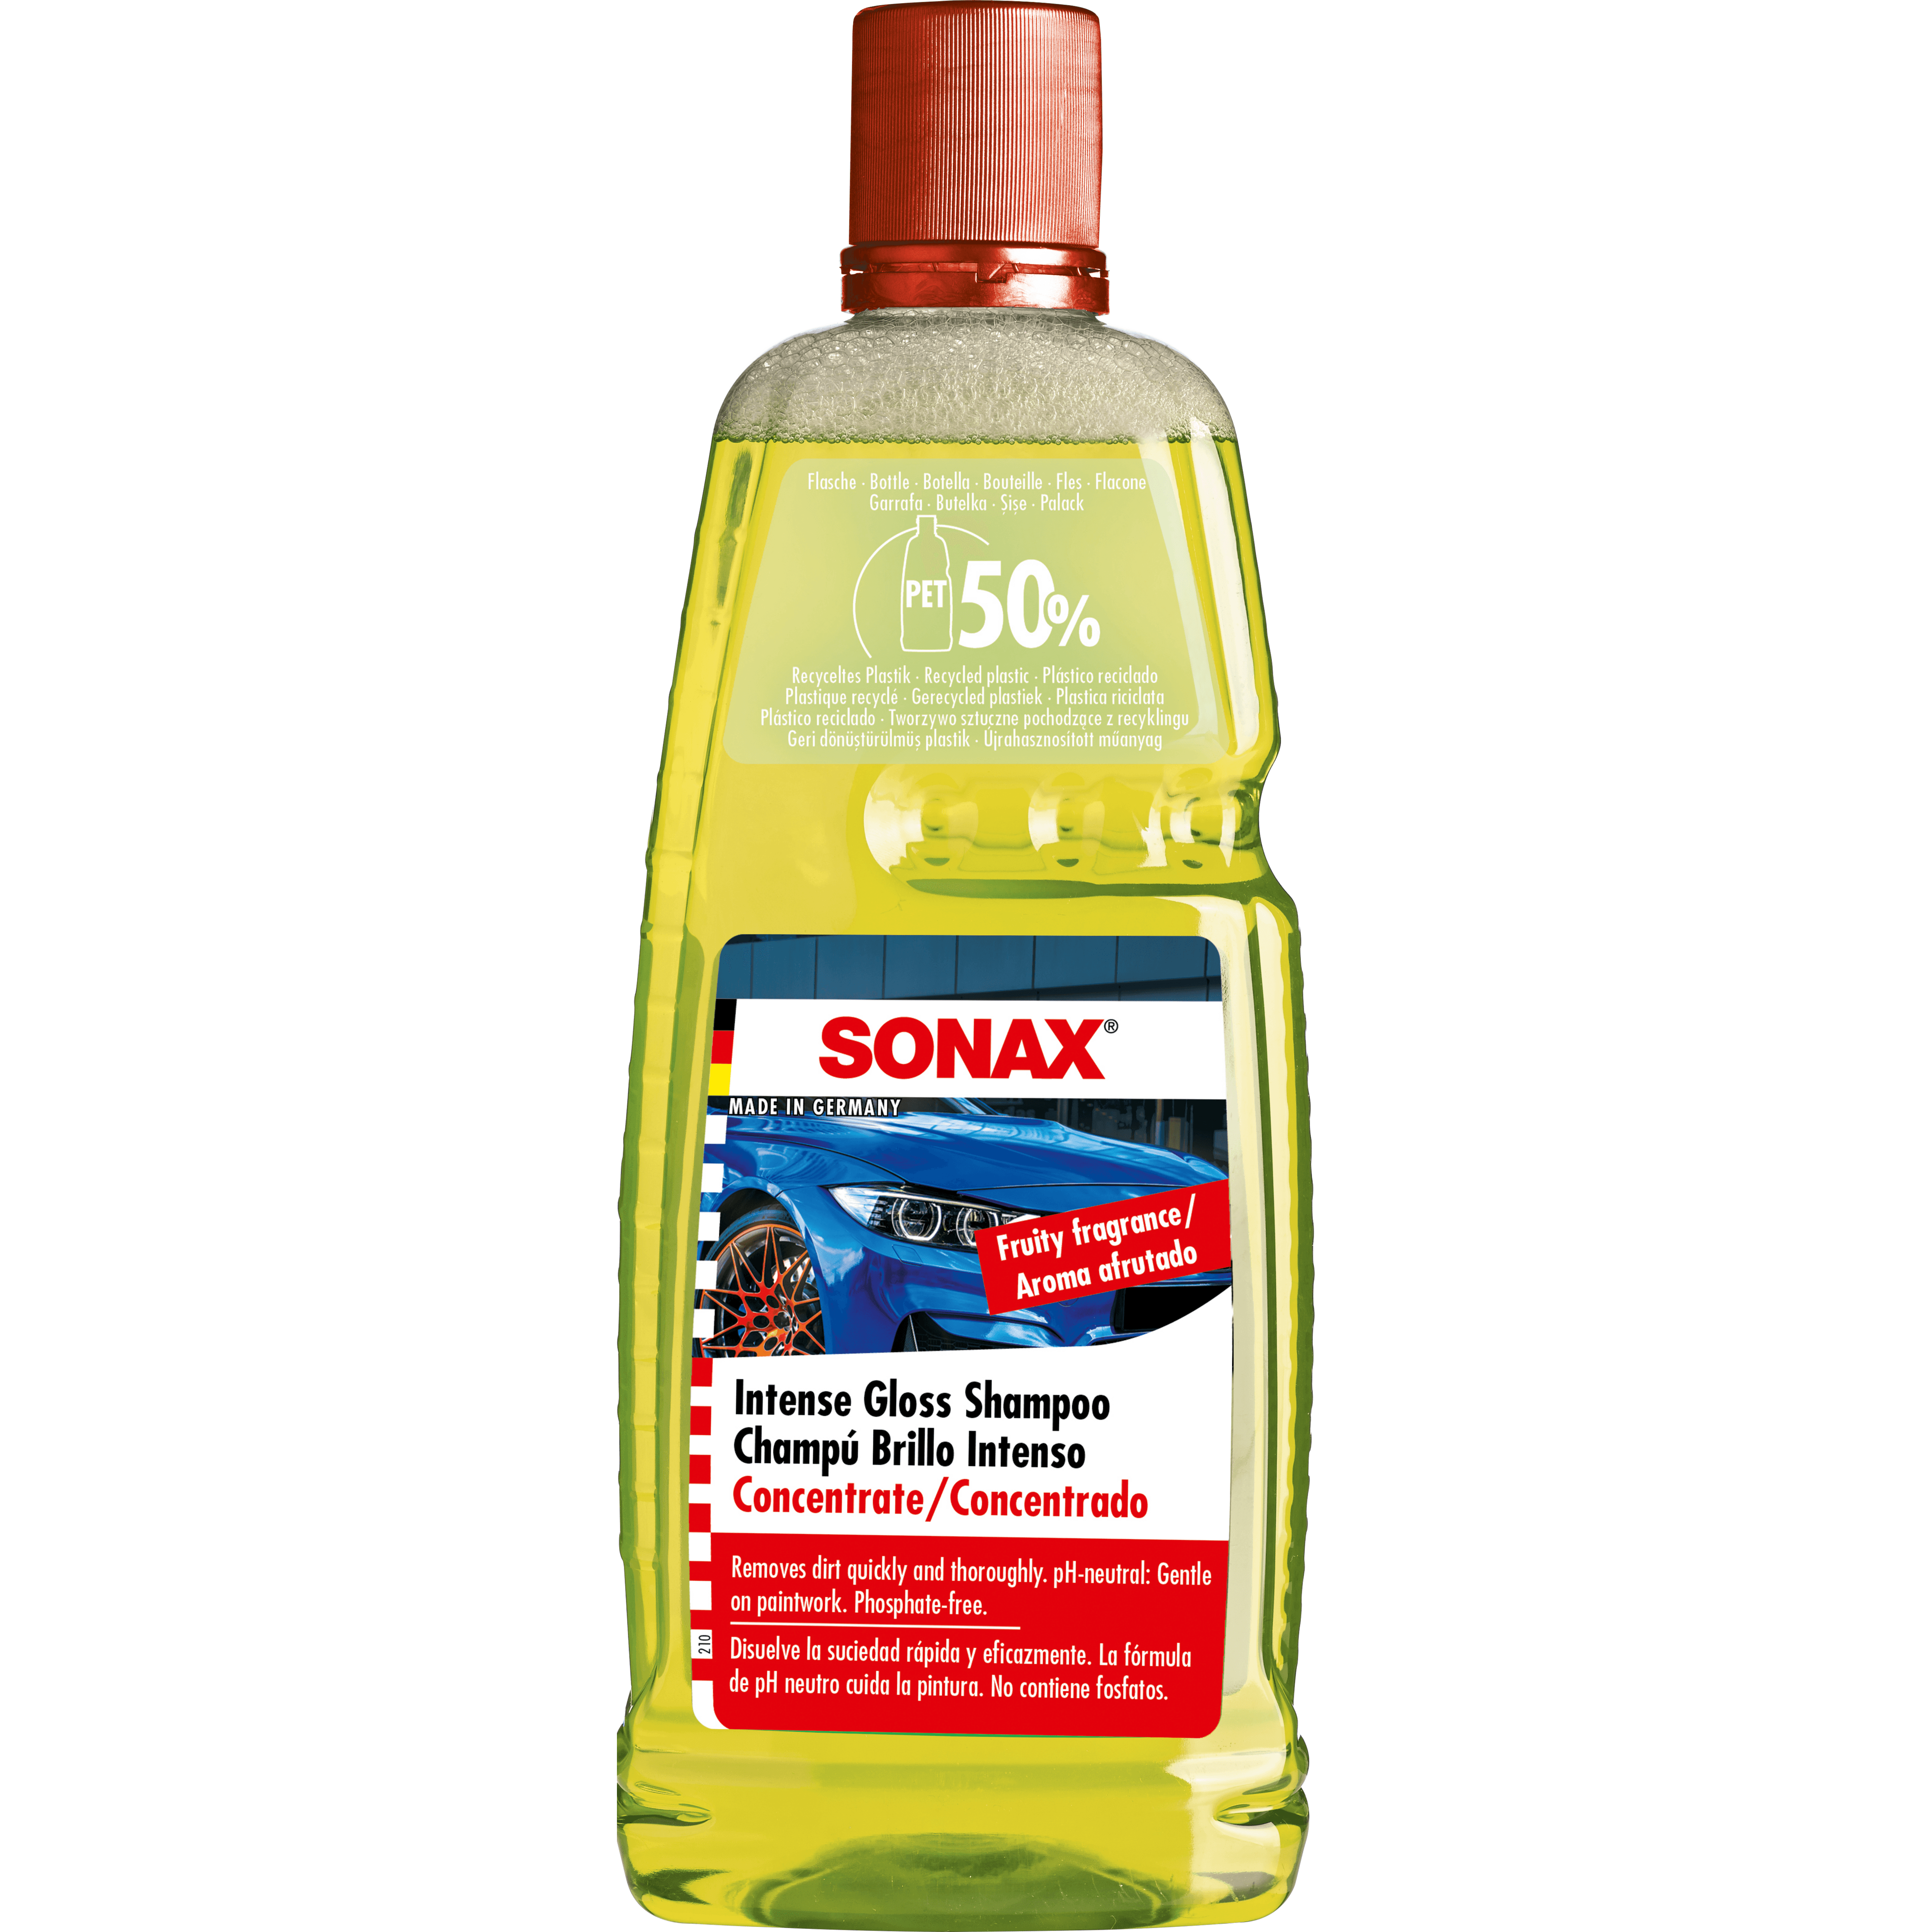 Billede af SONAX Intense Gloss Shampoo 1L